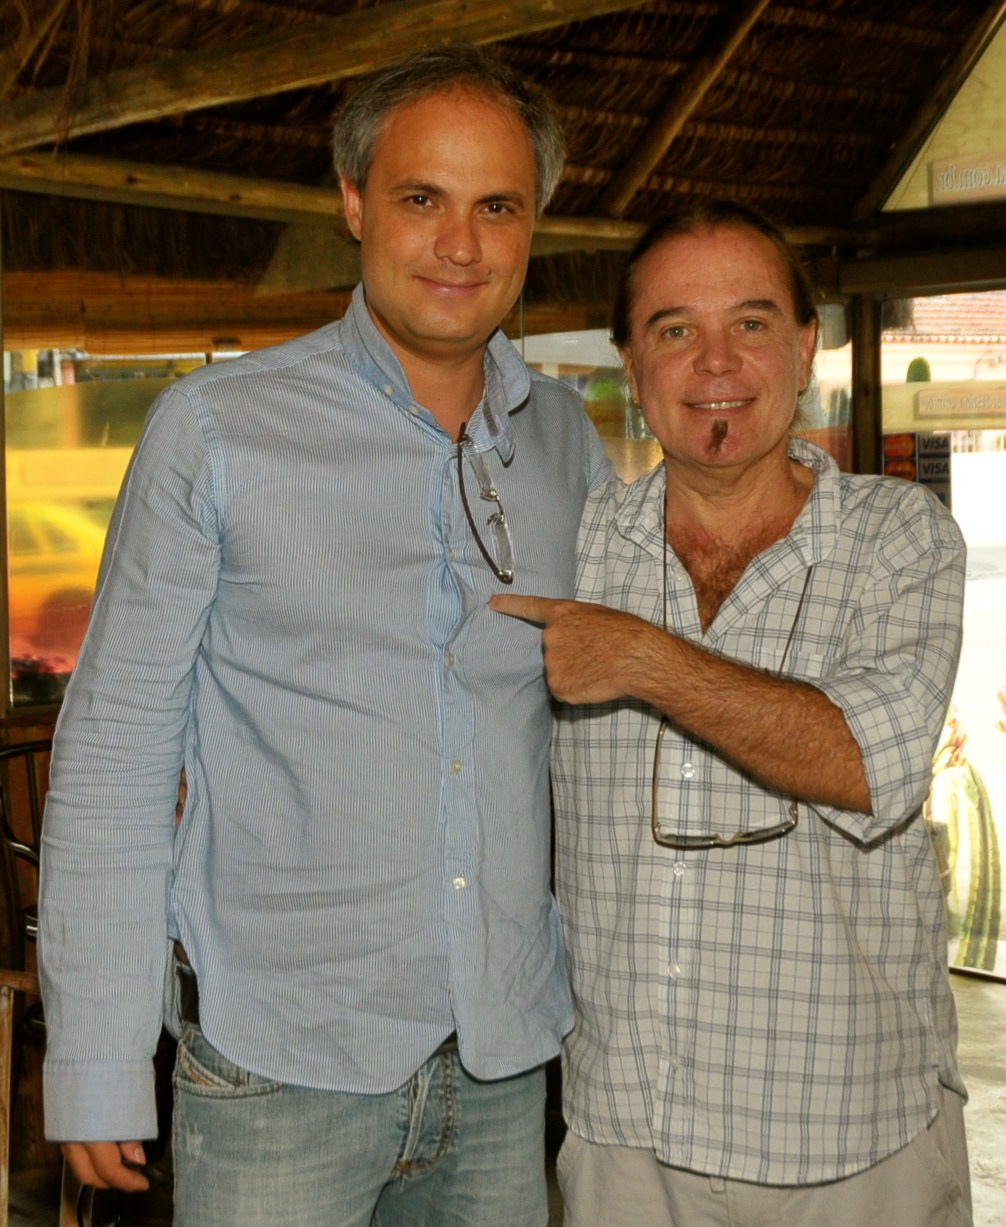 Alexandre Avancini and Sergio Penna (acting coach) at event of Vidas em Jogo (TV series 2011).